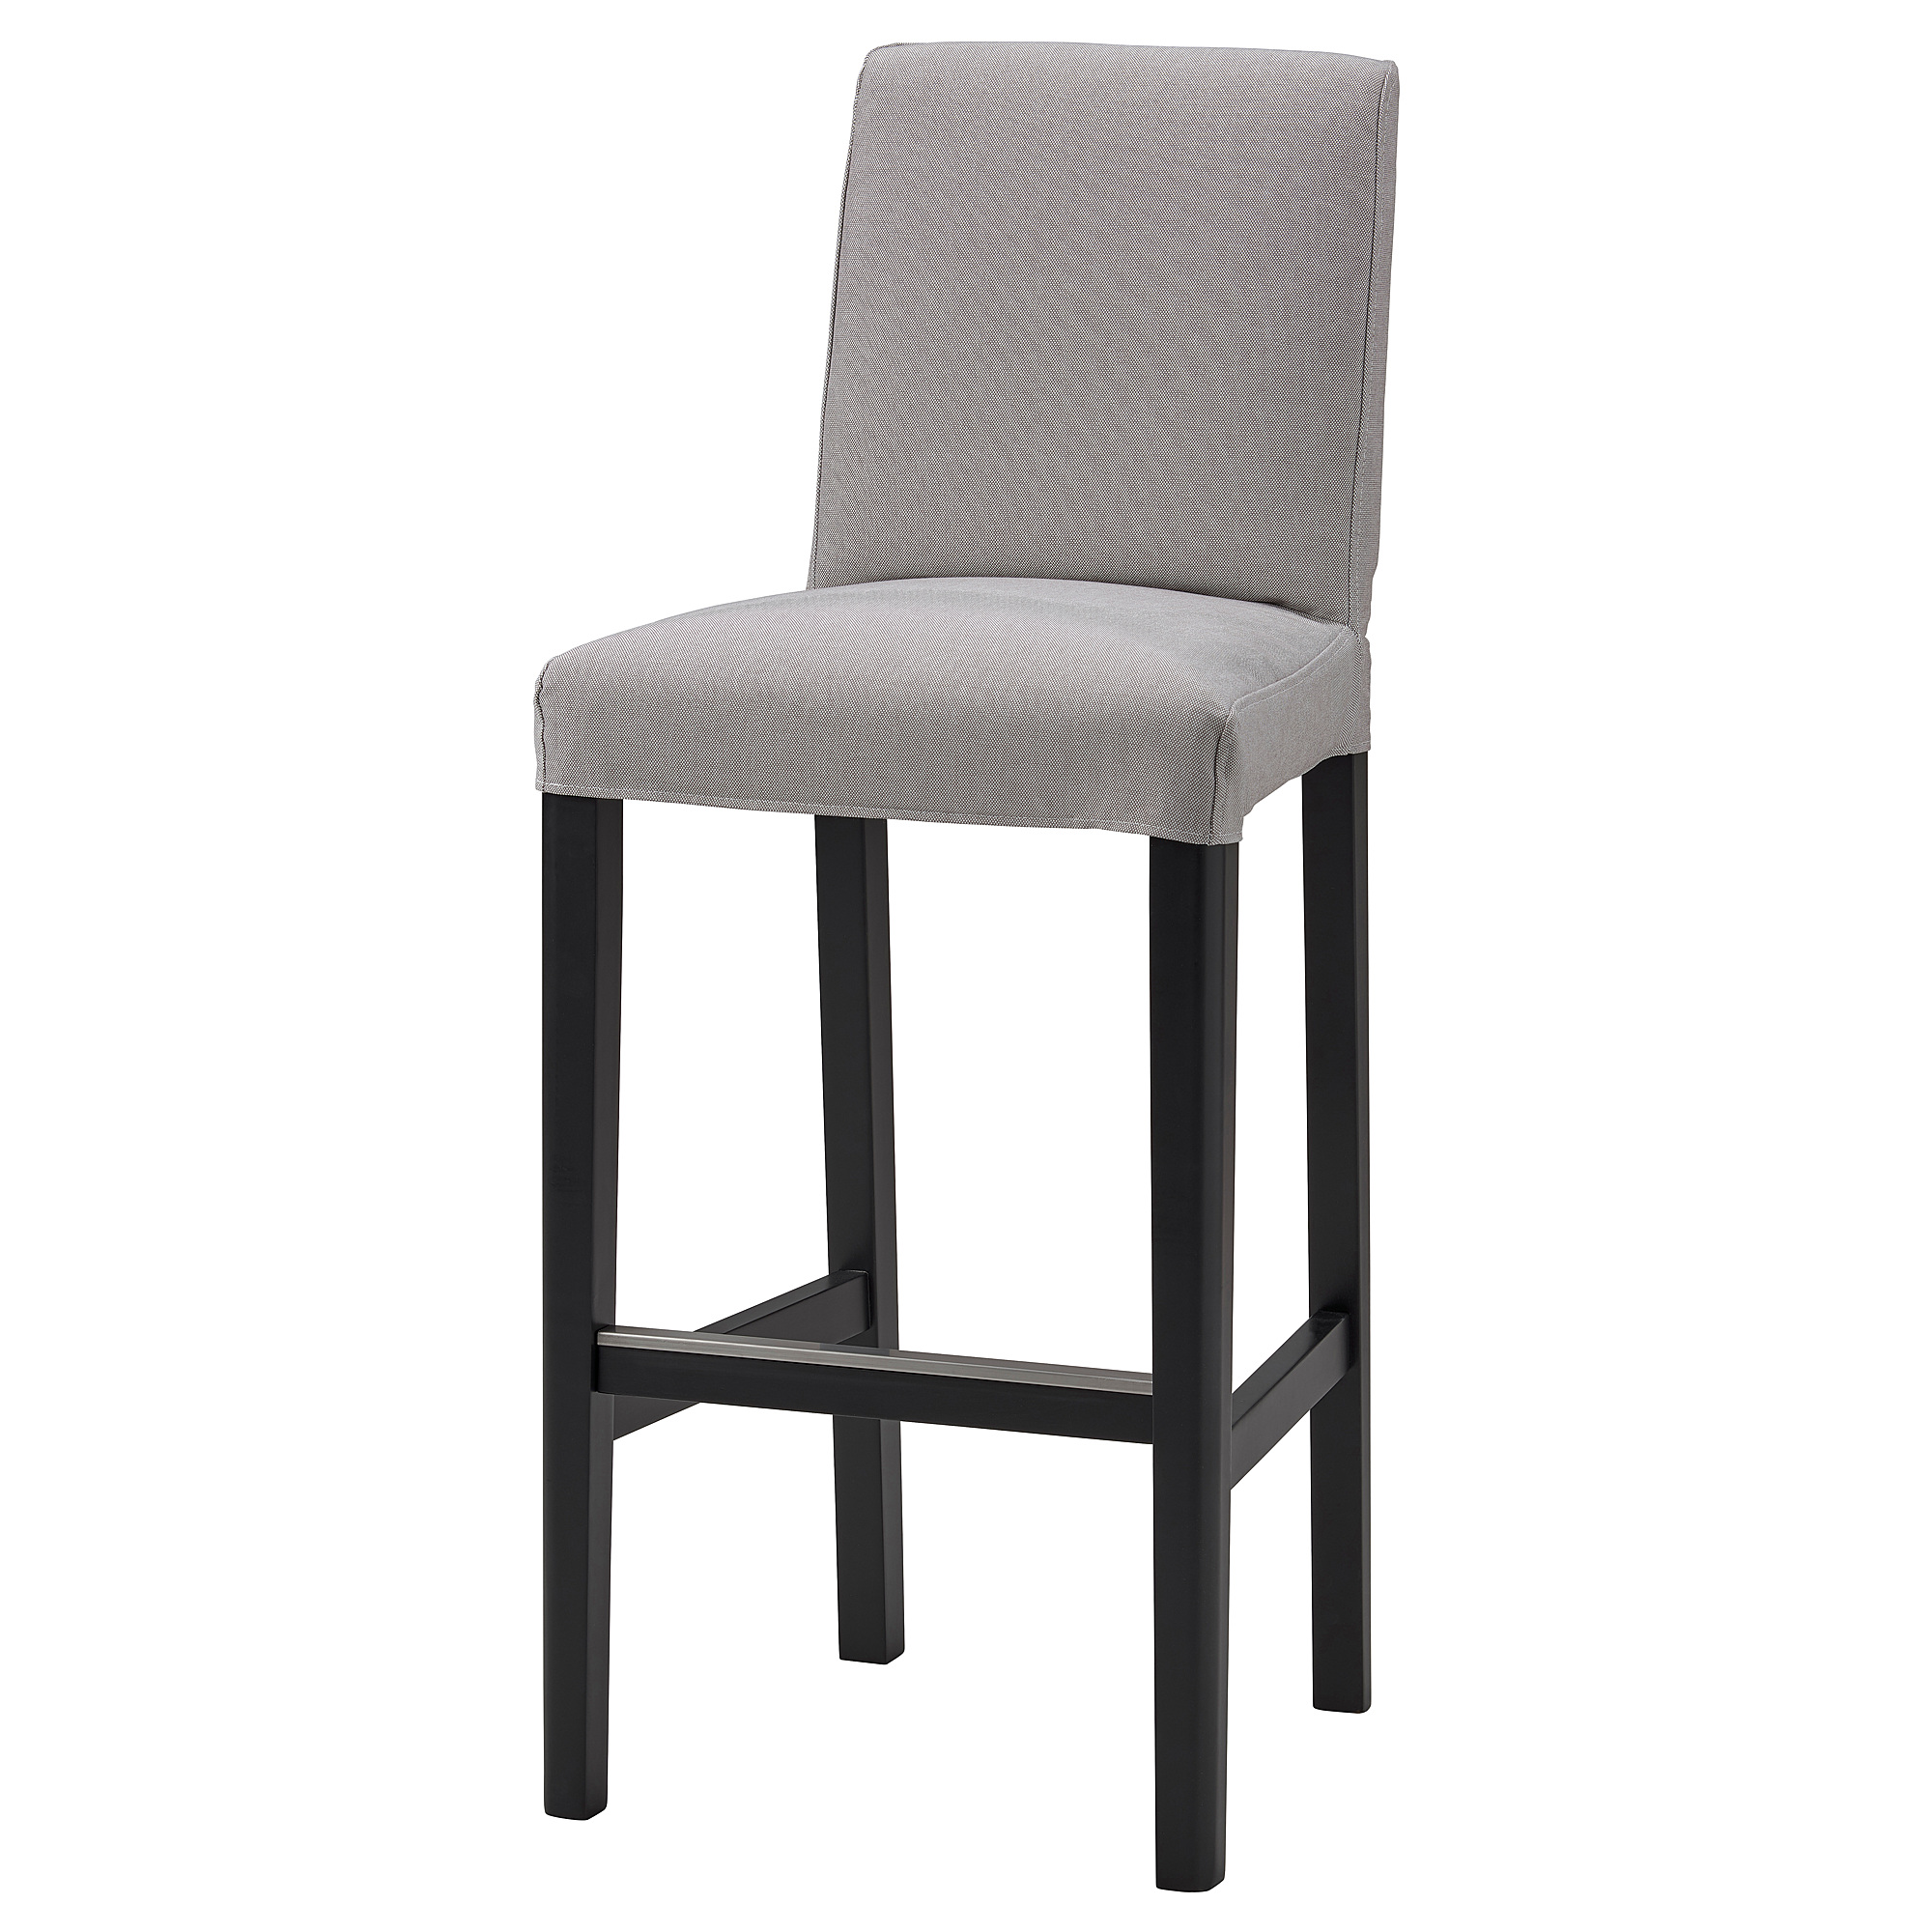 BERGMUND cover for bar stool with backrest